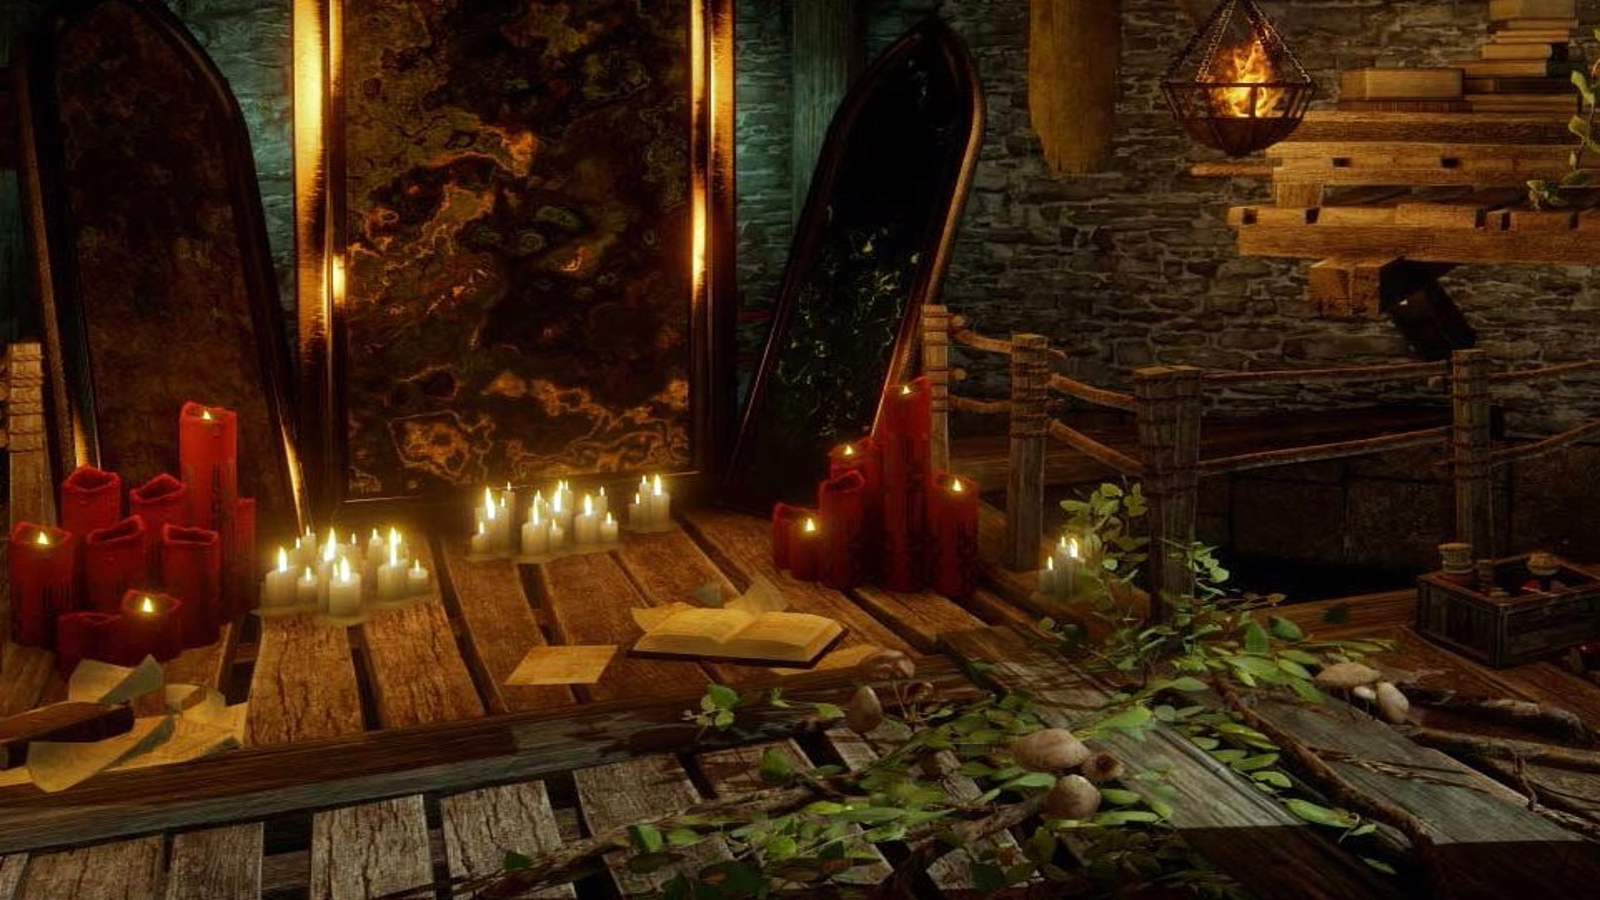 Origin] (DLC) Dragon Age Inquisition Gift Pack : r/FreeGameFindings